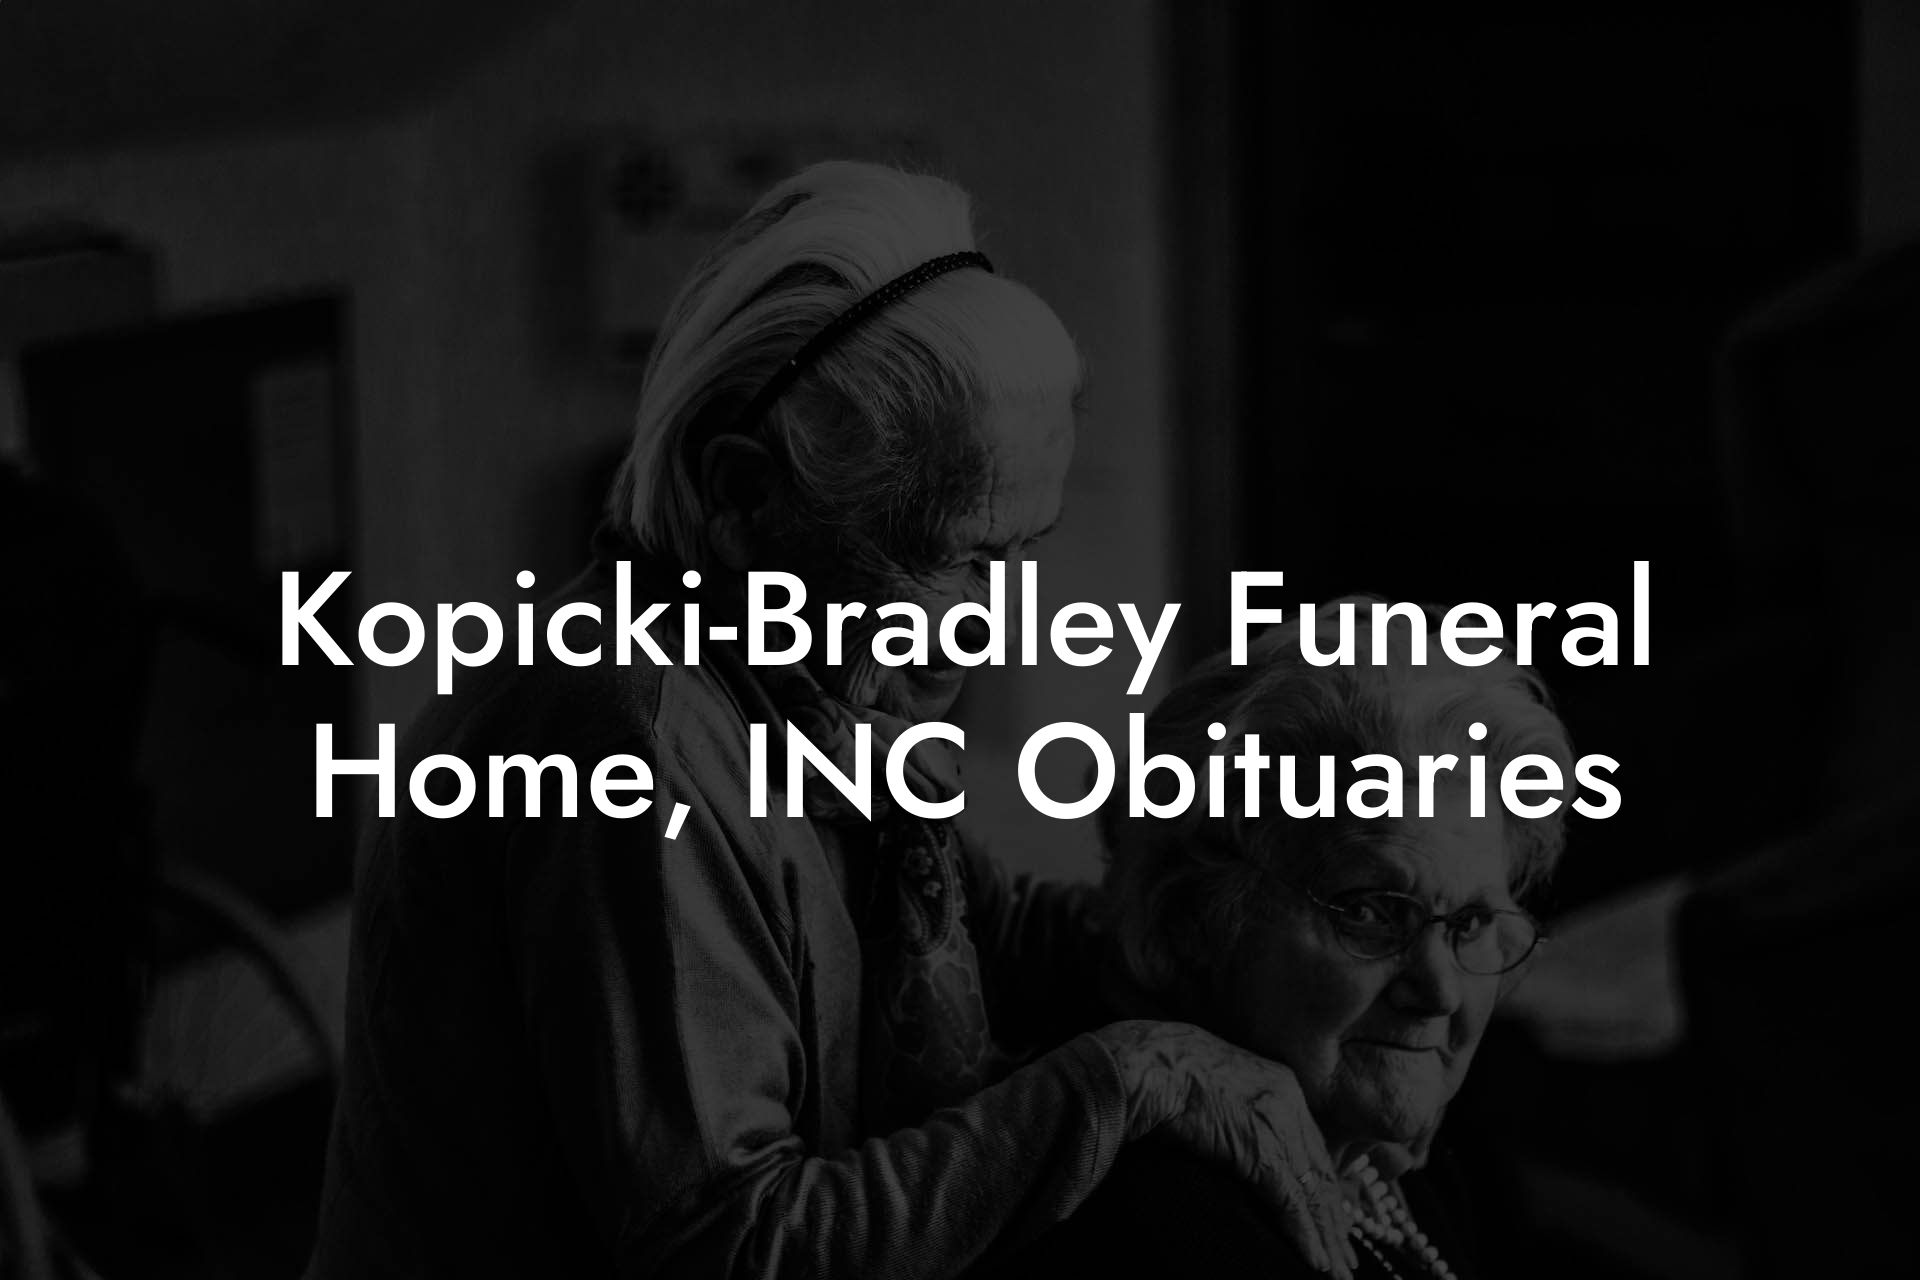 Kopicki-Bradley Funeral Home, Inc. Obituaries